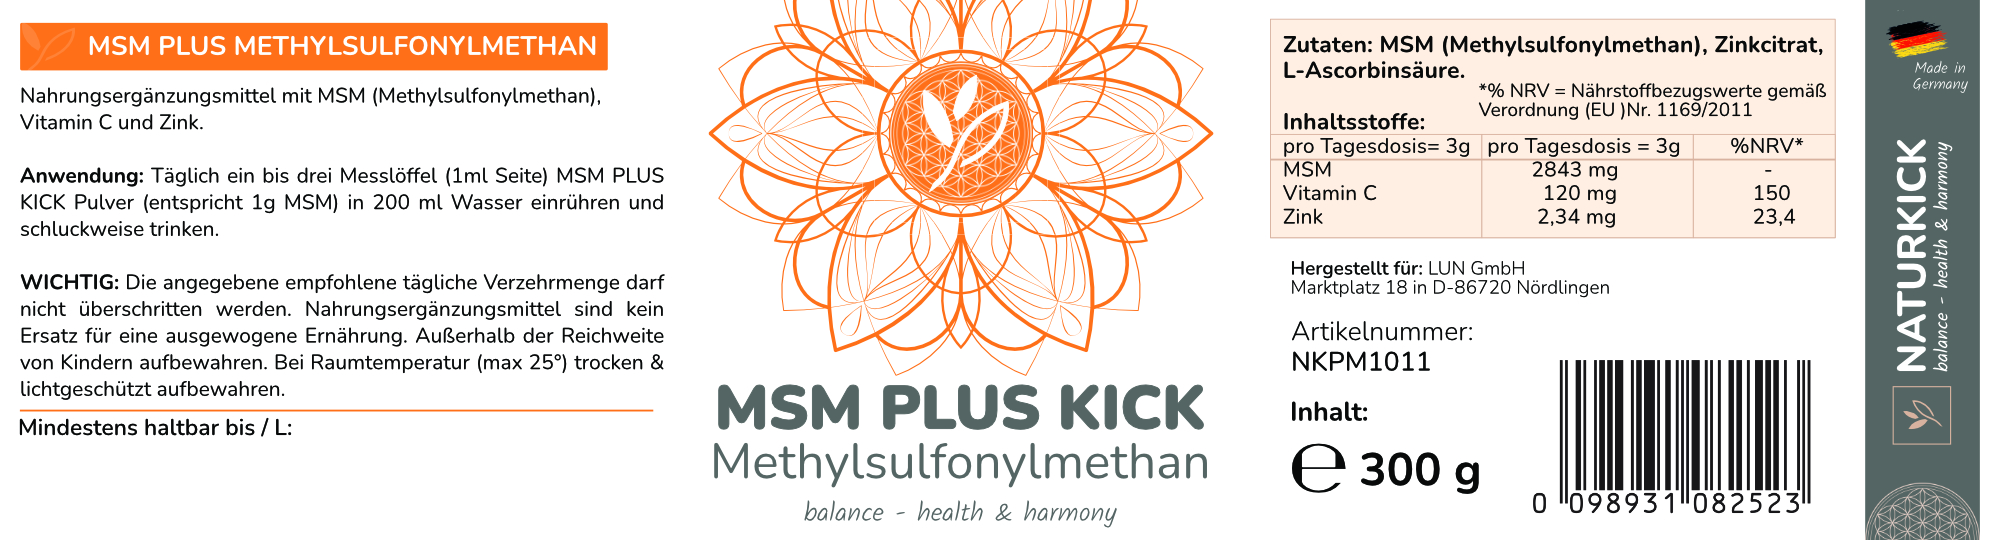 NATURKICK MSM Plus Kick 300g Methylsulfonylmethan